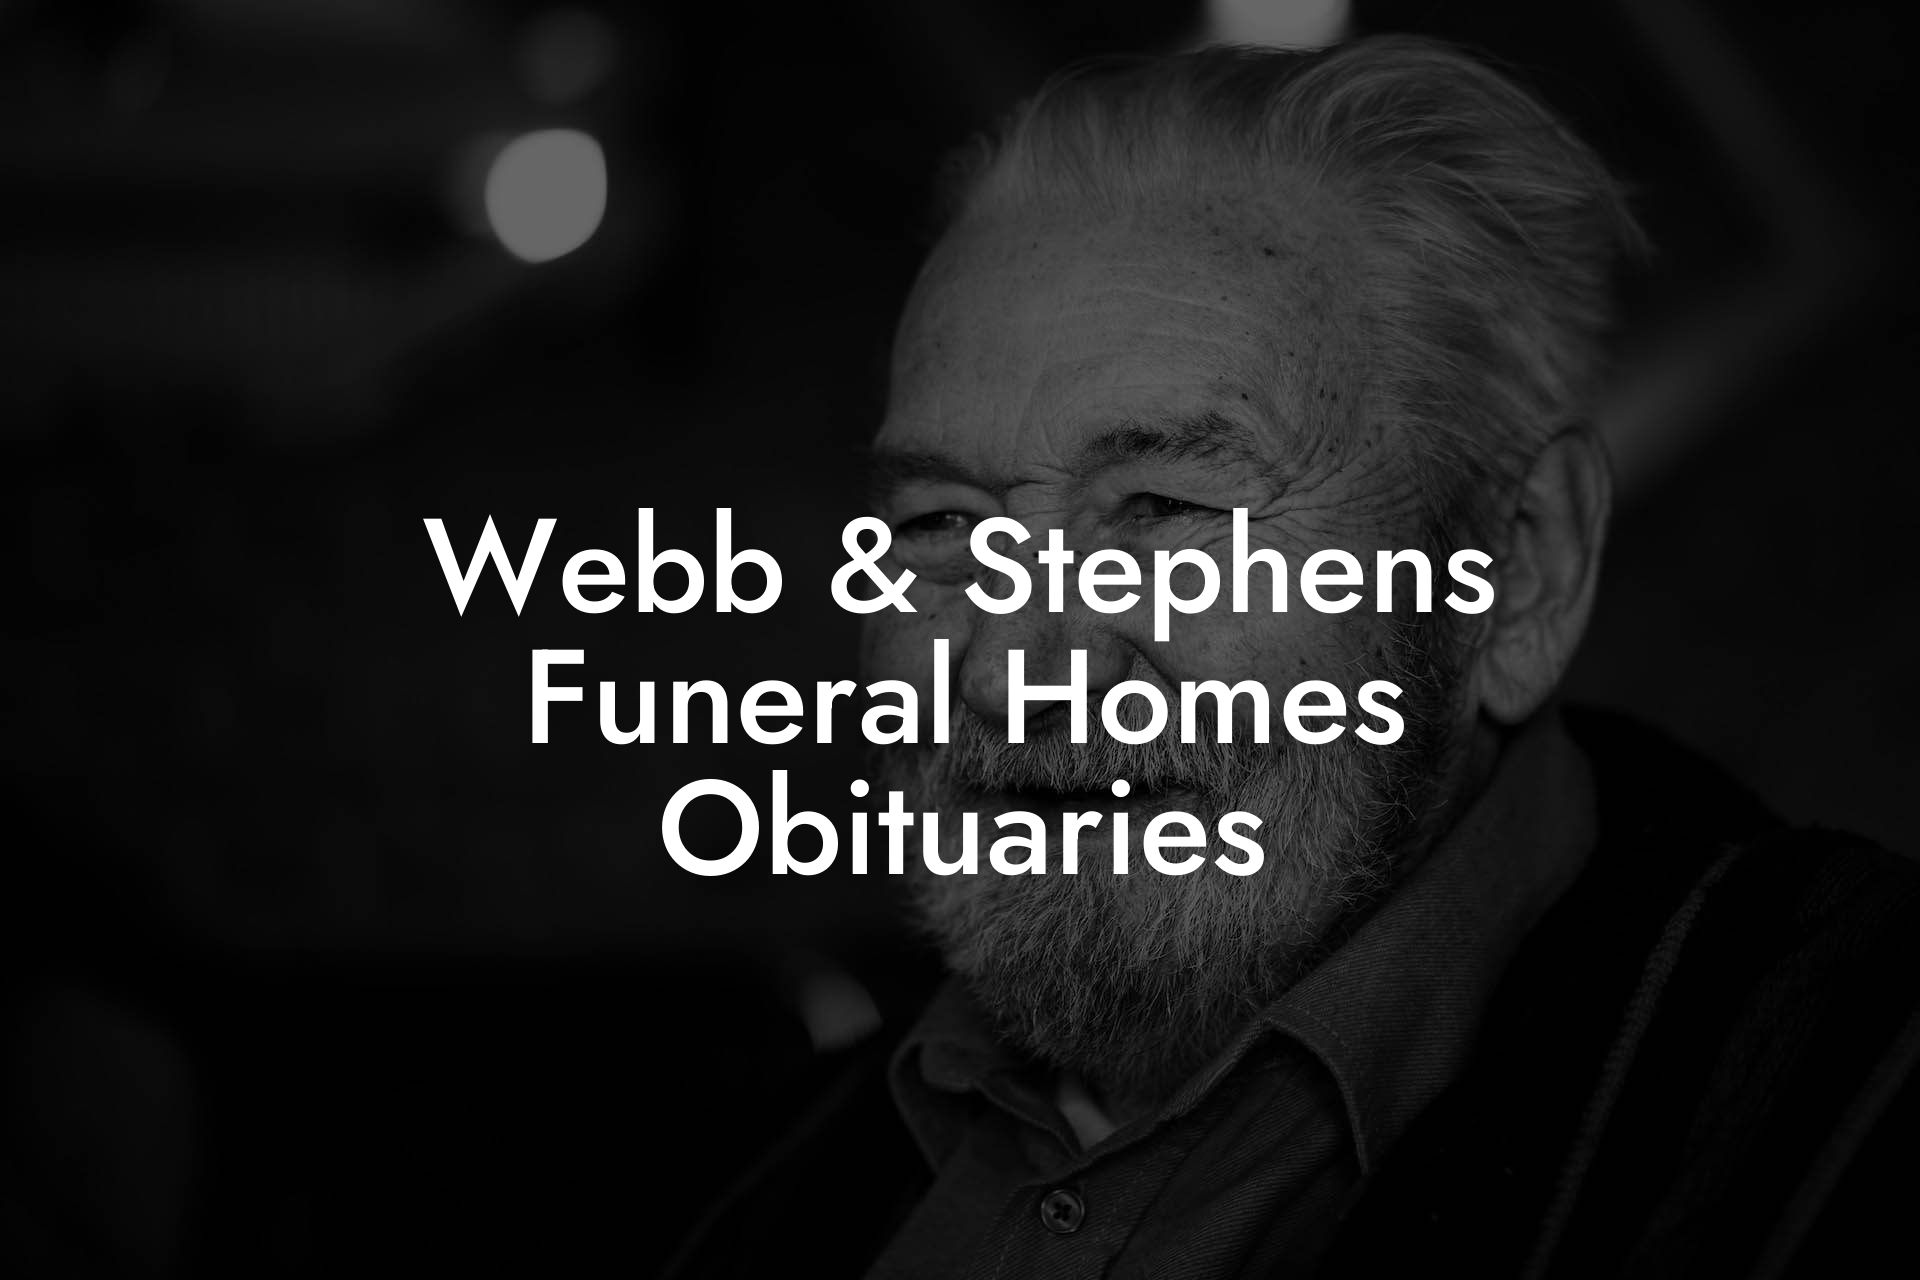 Webb & Stephens Funeral Homes Obituaries